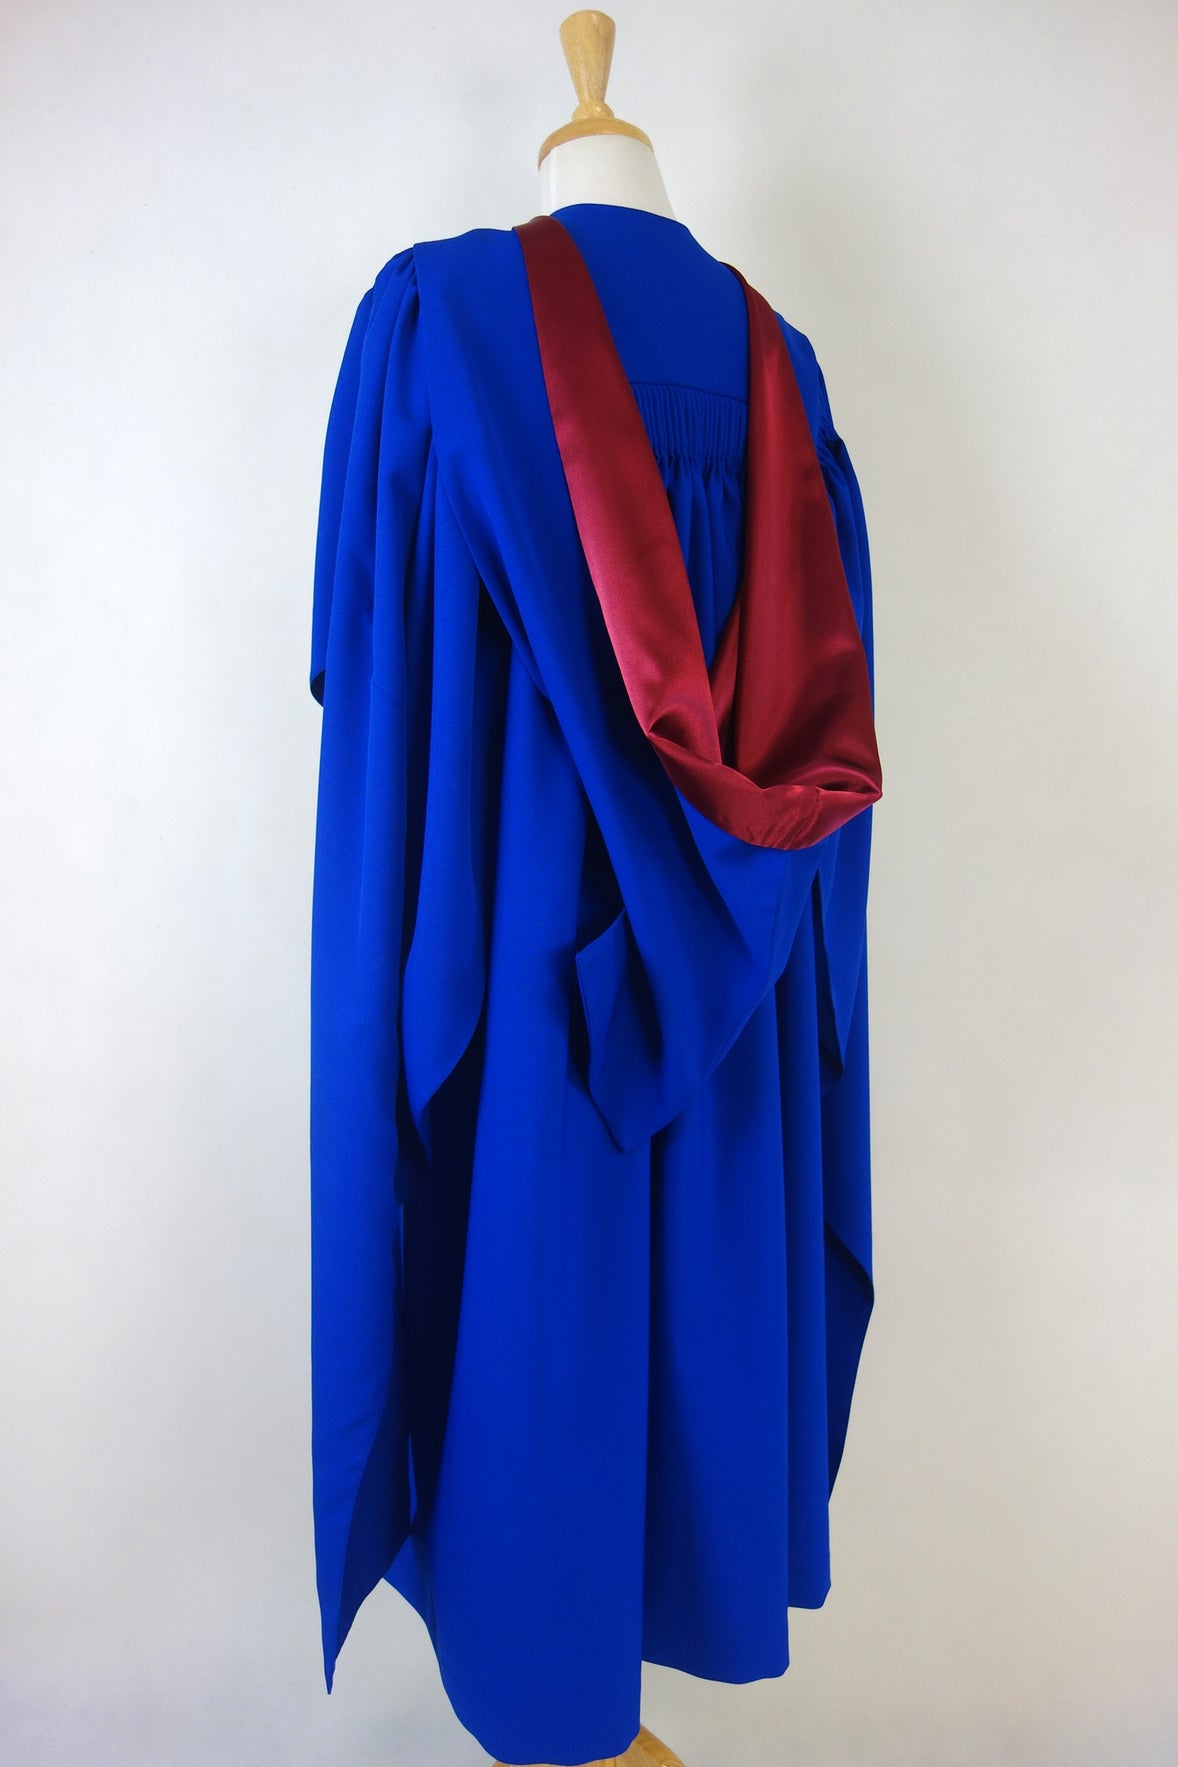 Federation University PhD Graduation Gown Set - Gown, Hood and Bonnet